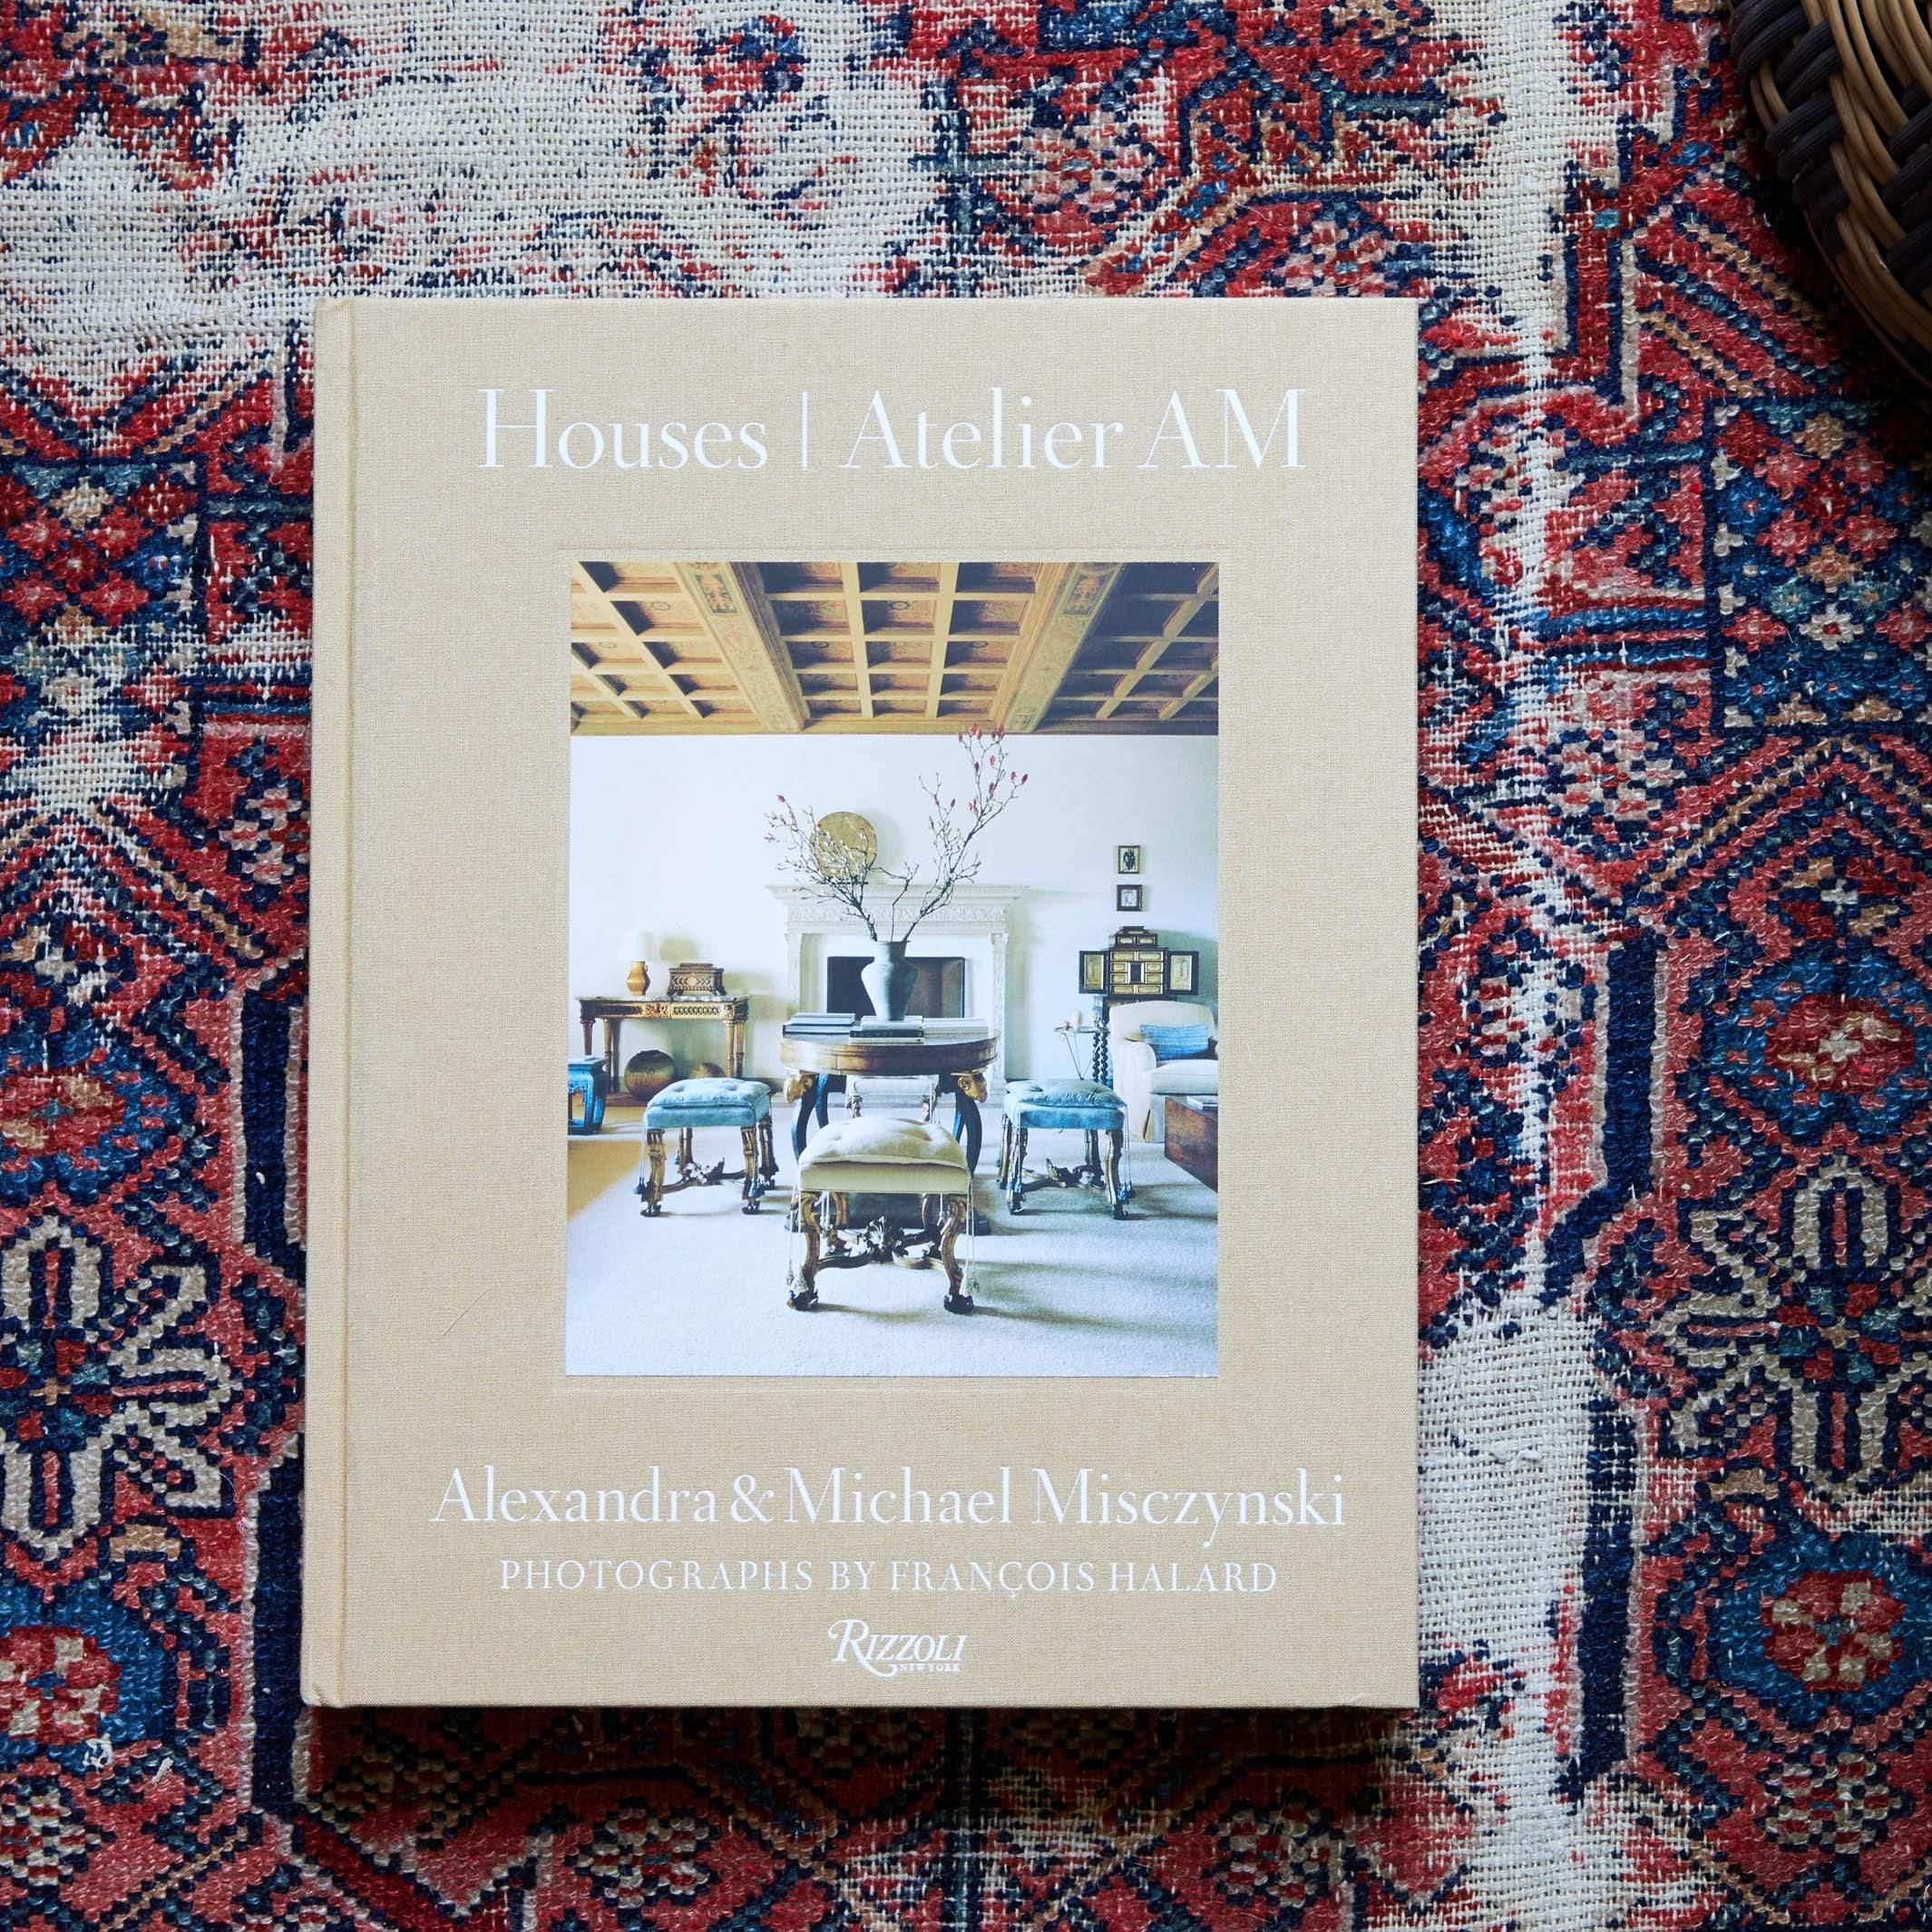 Houses | Atelier AM